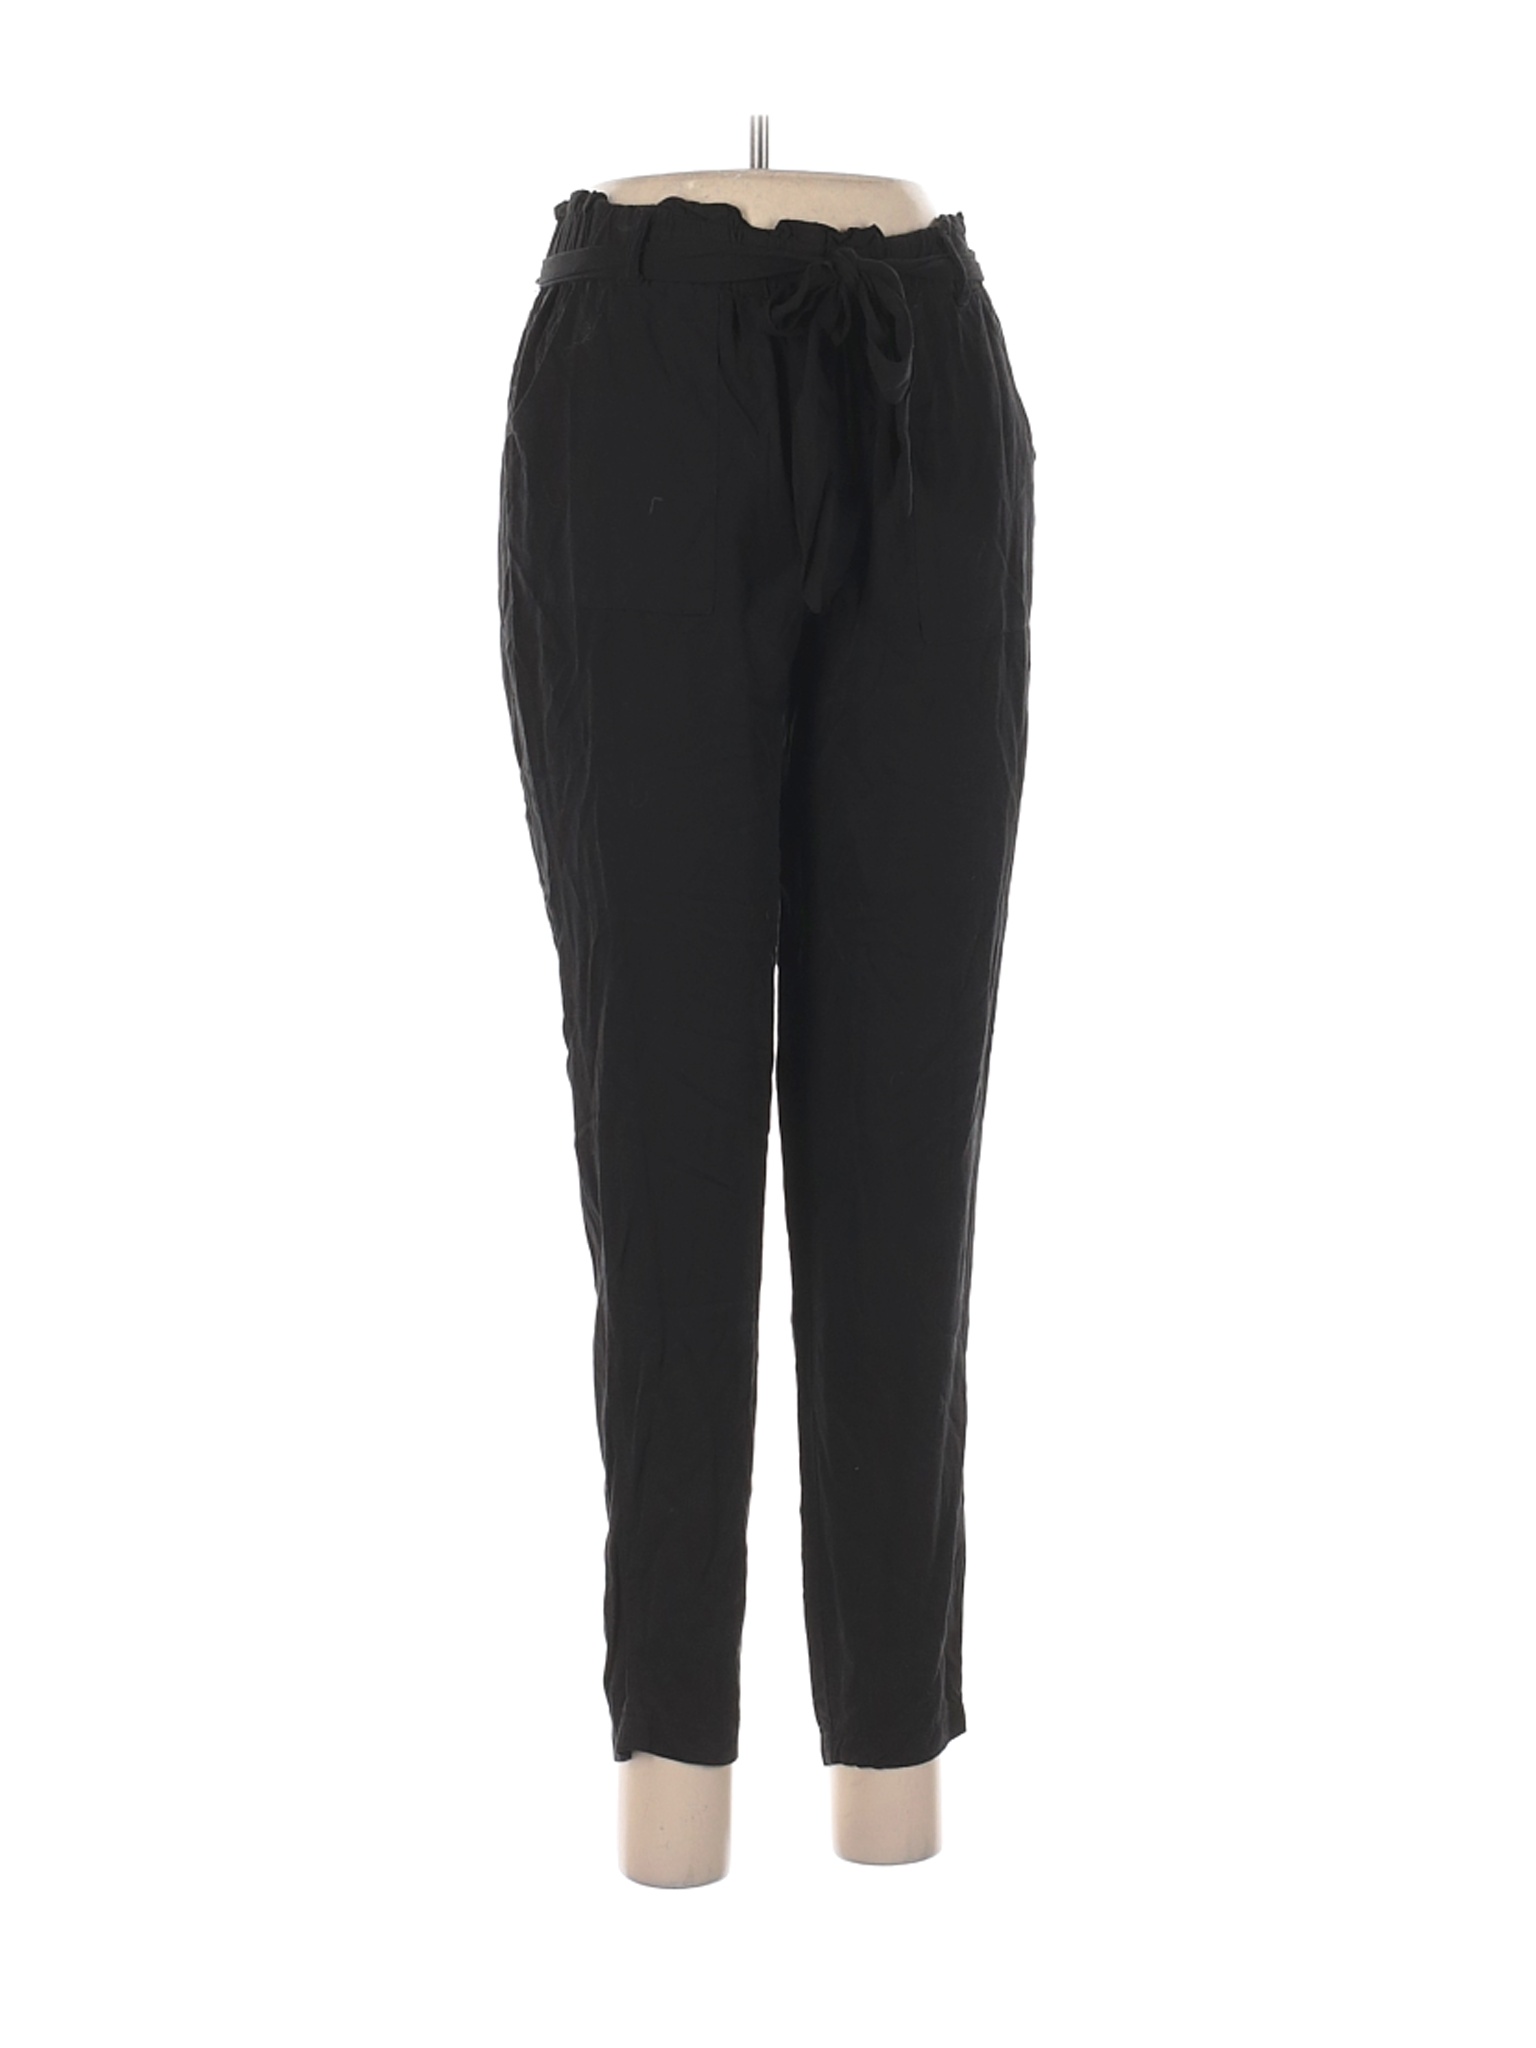 Shinestar Women Black Casual Pants M | eBay